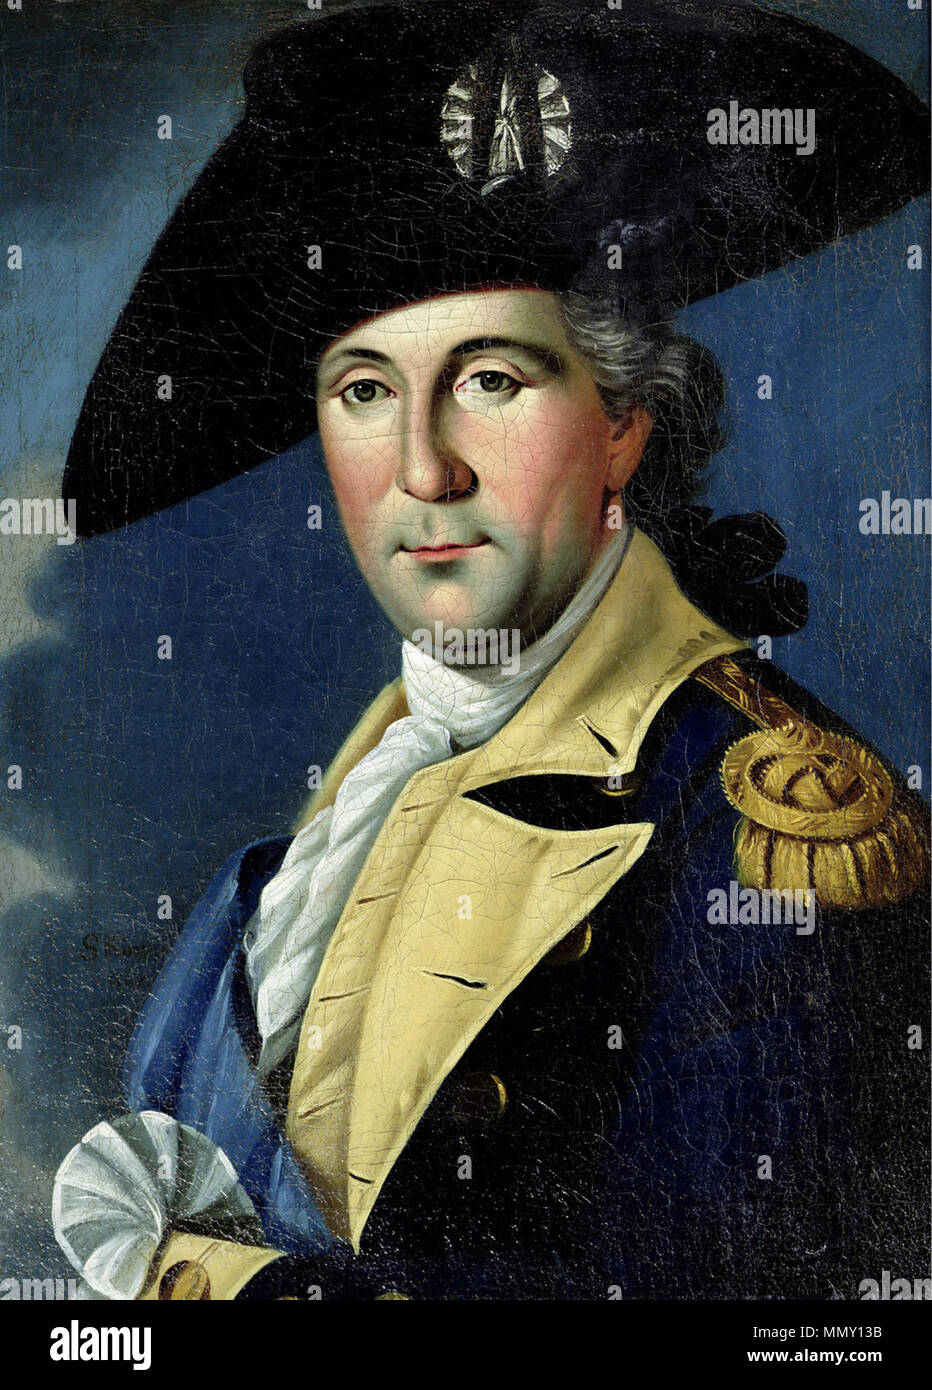 . Inglese: General George Washington Italiano: Il generale George Washington, il comandante in capo dell'esercito continentale . Il XVIII secolo. Samuel King (1749-1819) George Washington 1775 (2) Foto Stock